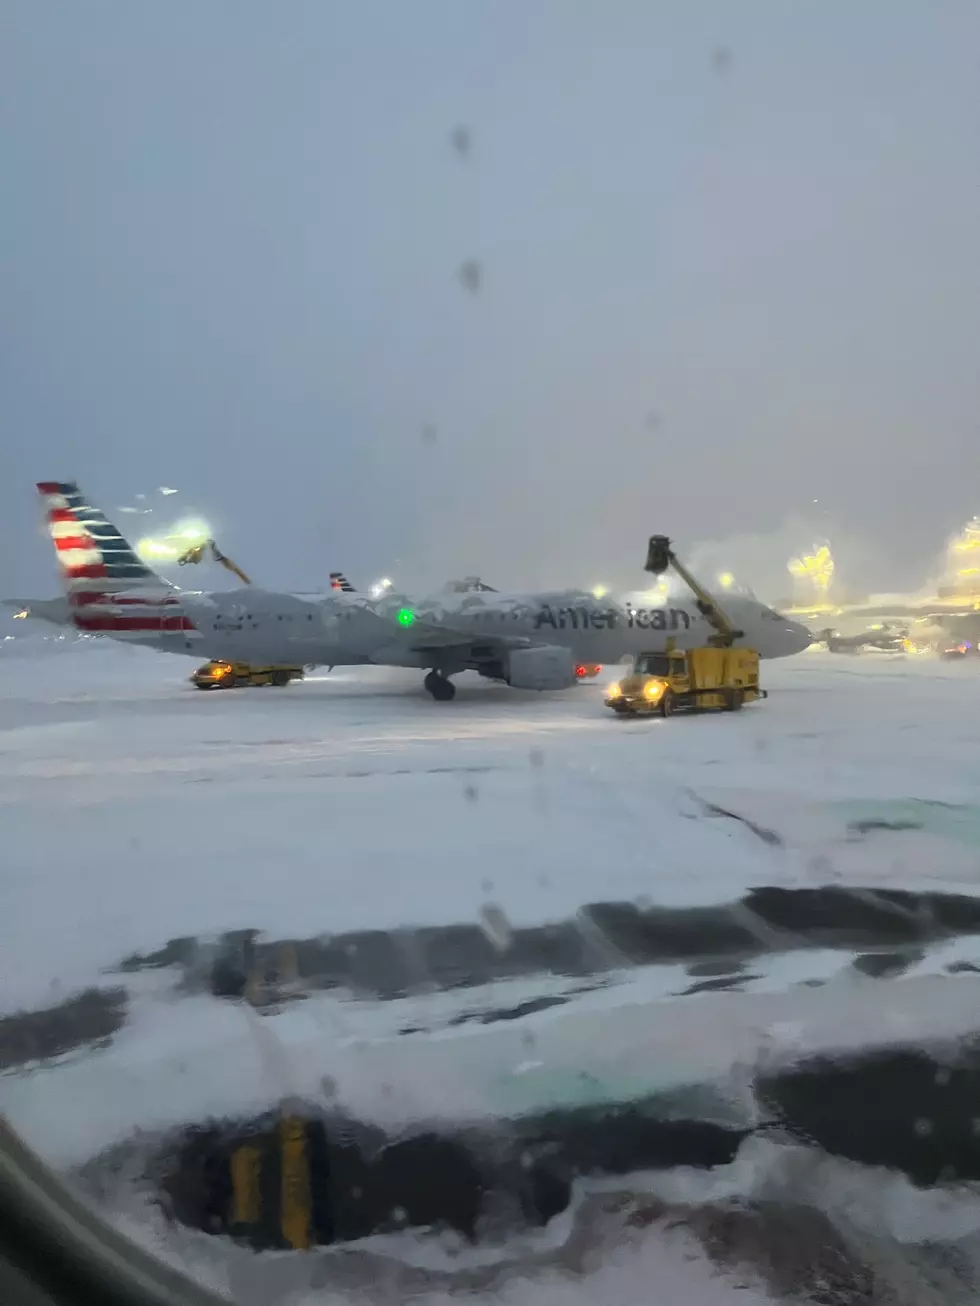 Crews De-icing  Planes In Massive Snowstorm In Buffalo, New York